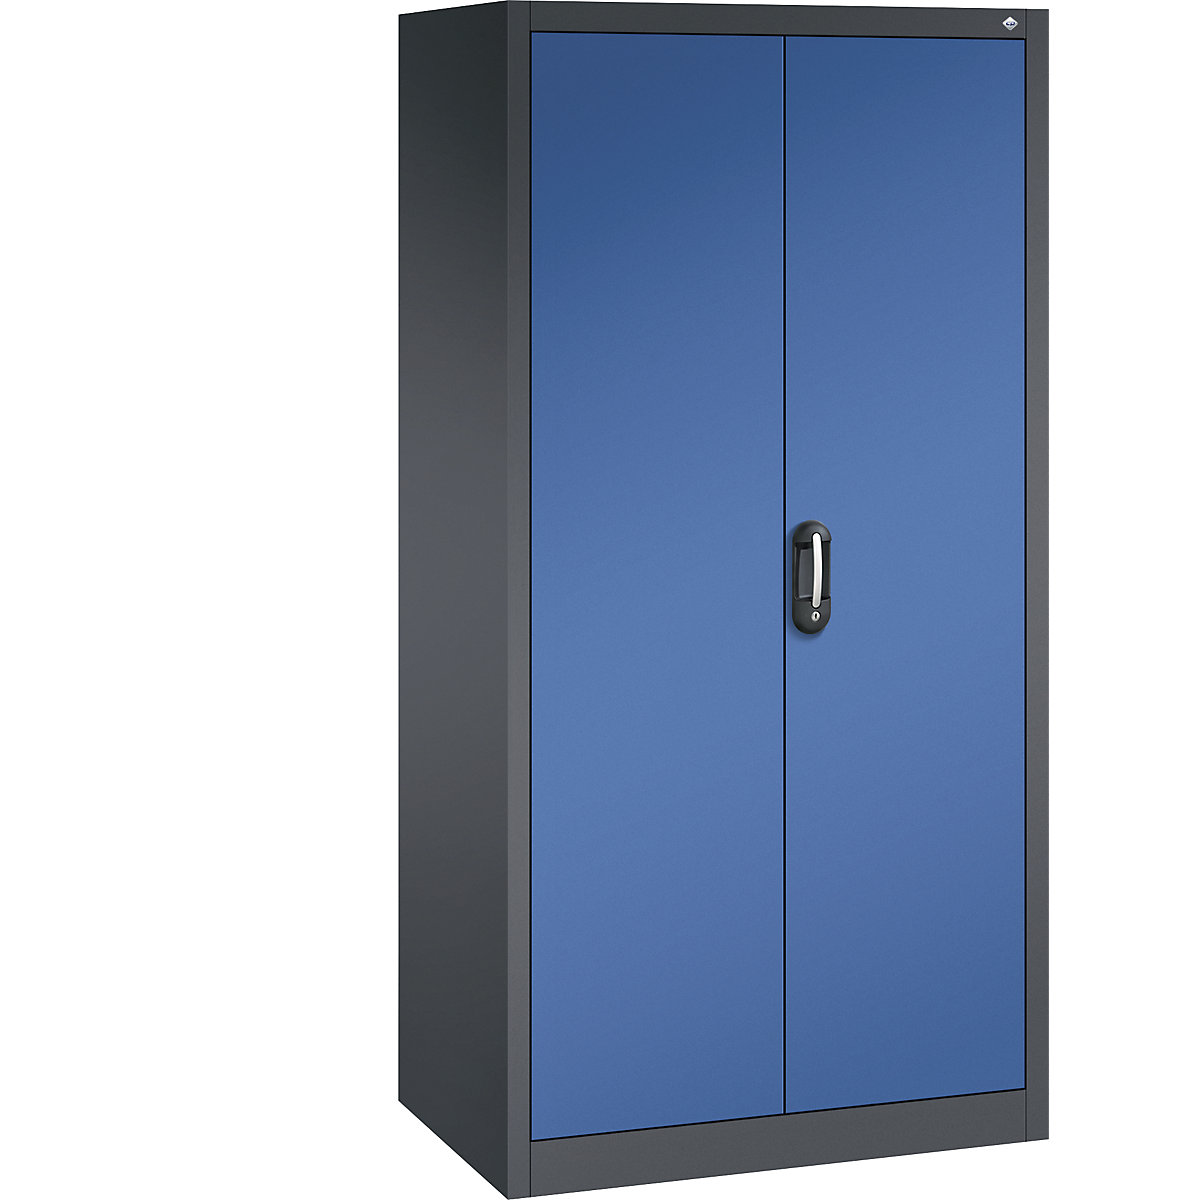 Univerzalna omara ACURADO – C+P, ŠxG 930 x 600 mm, črno siva / encijan modra-23